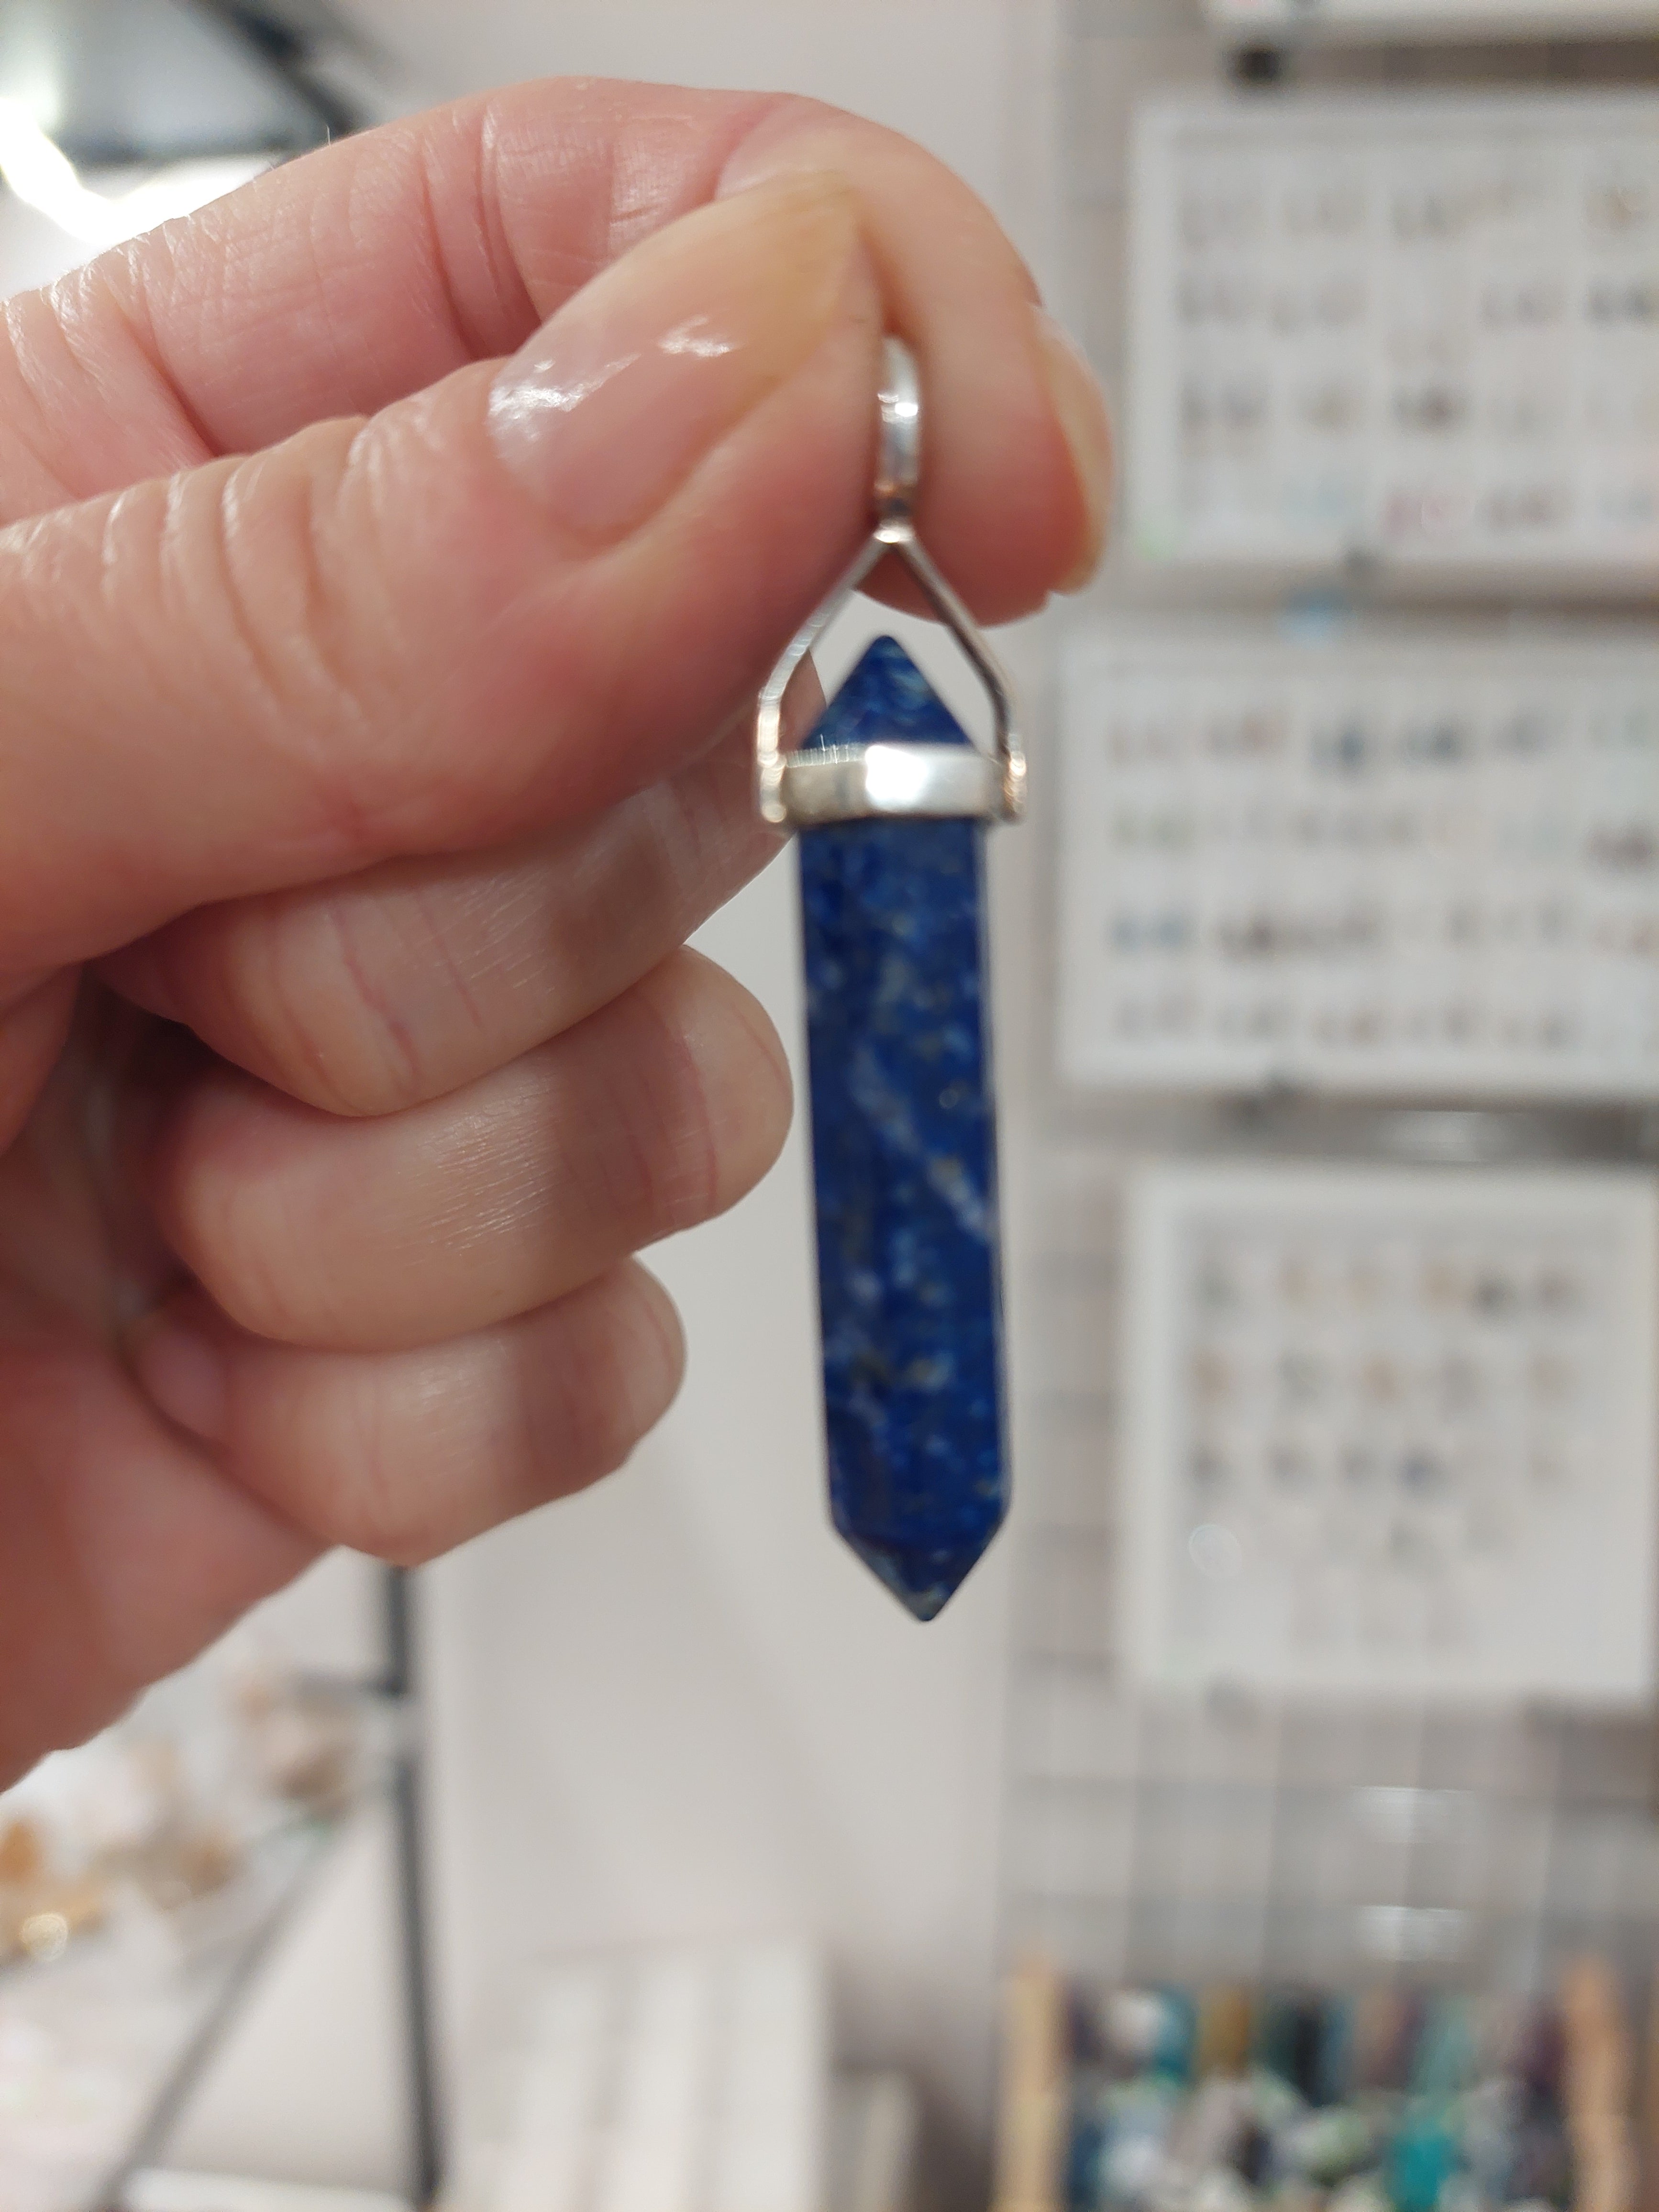 Lapis Lazuli Double Terminated Point Pendant - 3.75cm - 925 Sterling Silver